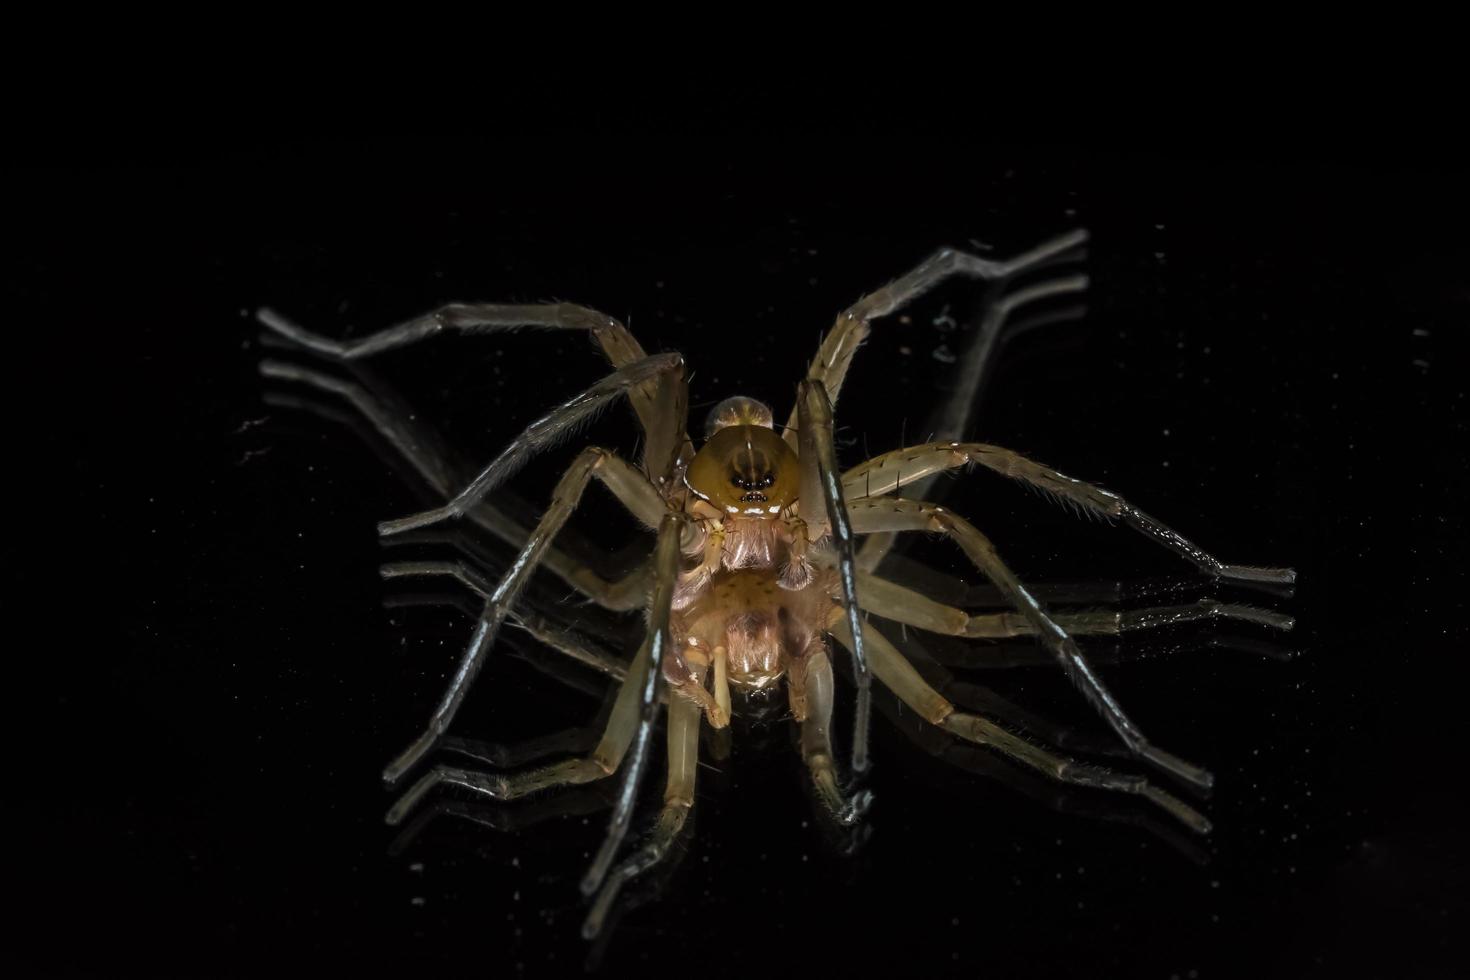 Spider, close-up photo